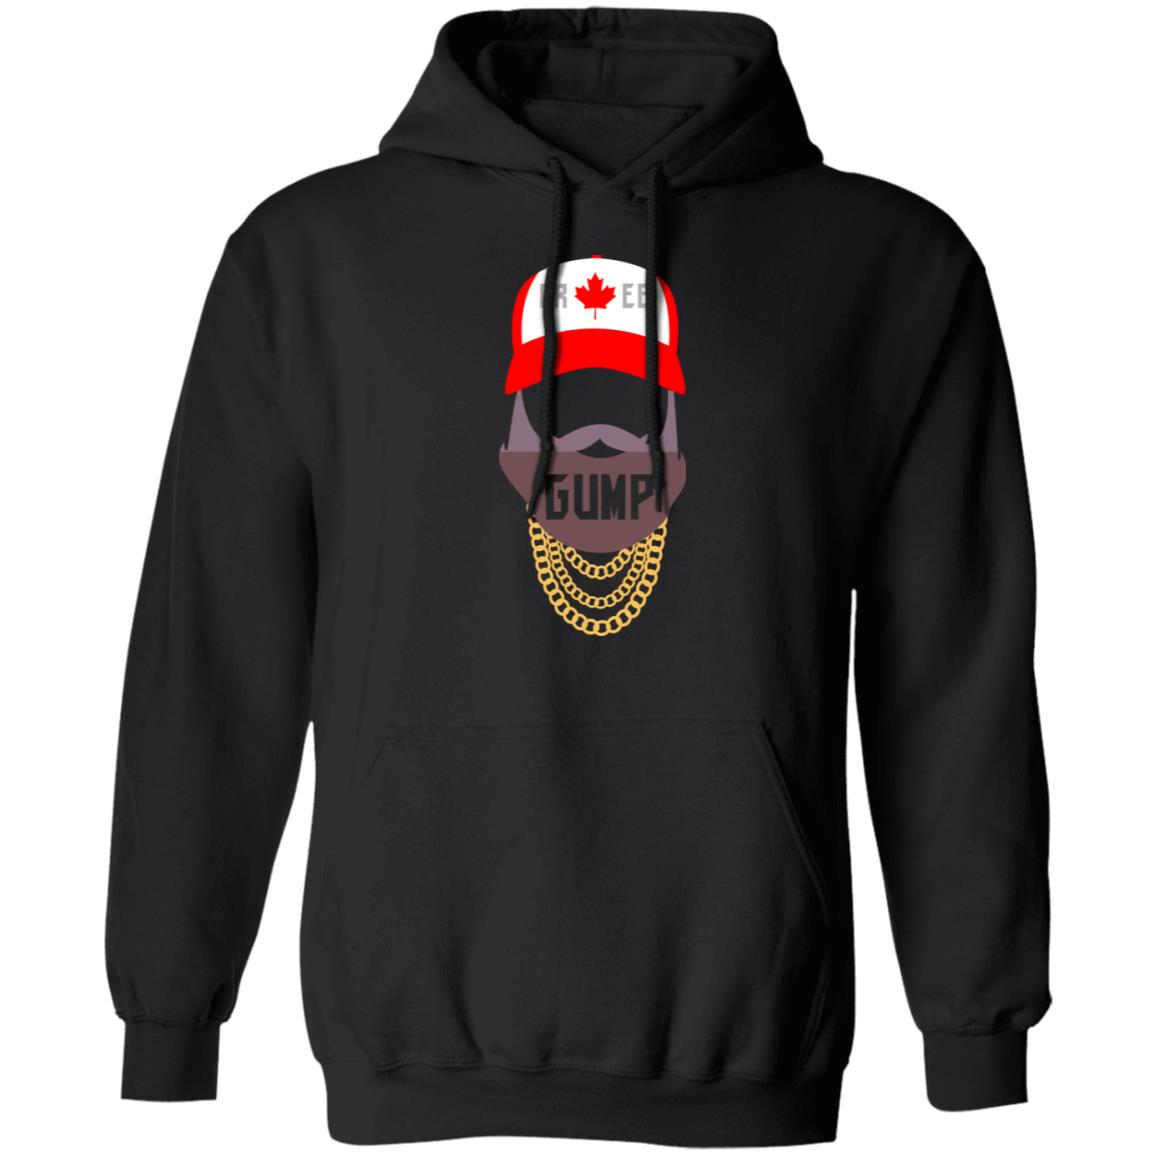 Free Gump Canadian Maple Leaf Shirt 2